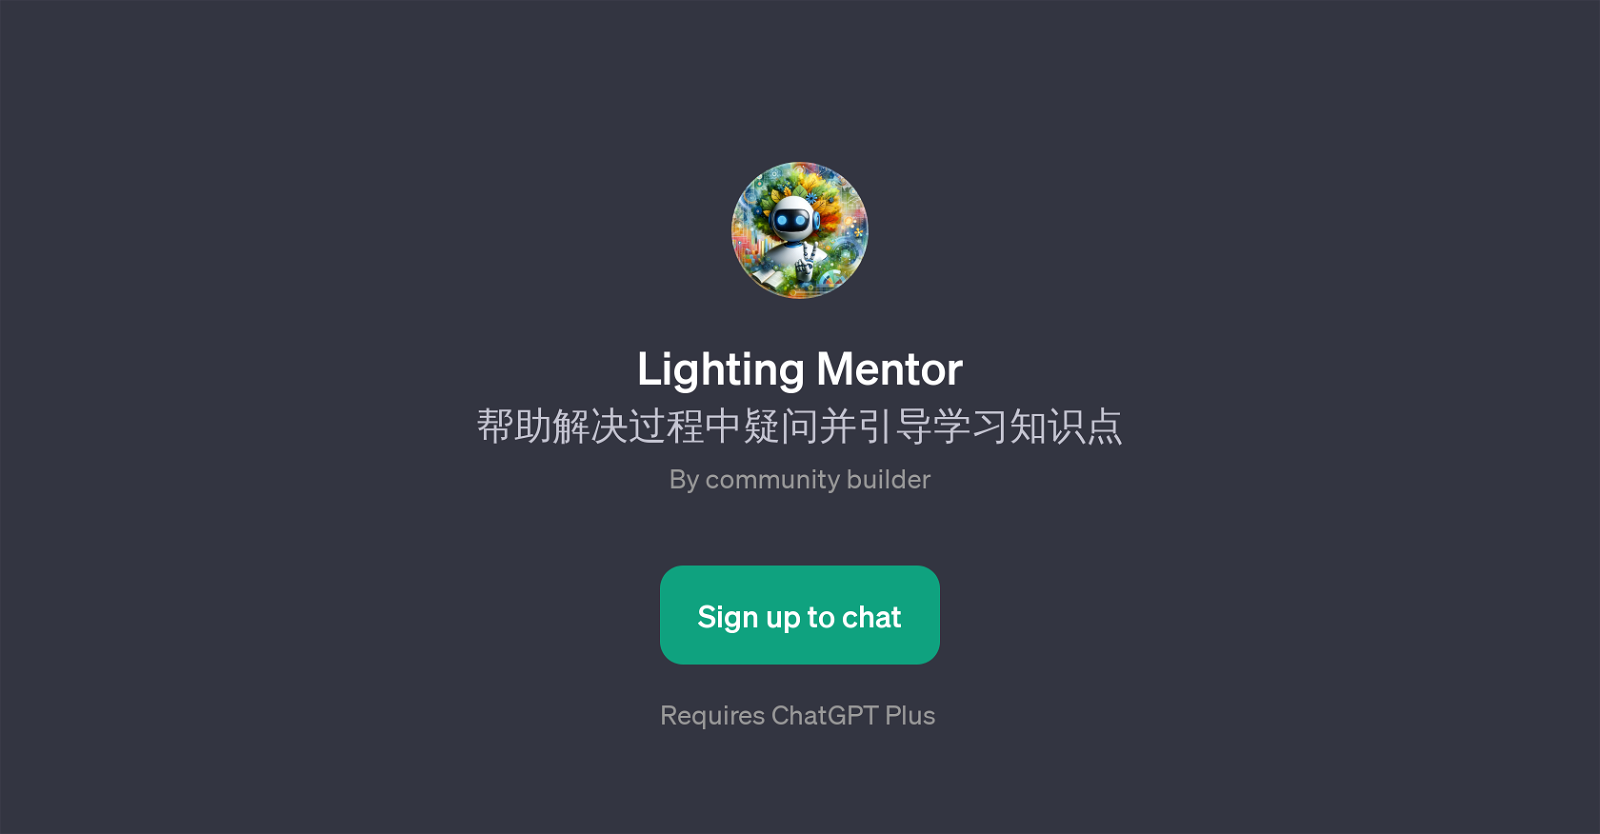 Lighting Mentor website